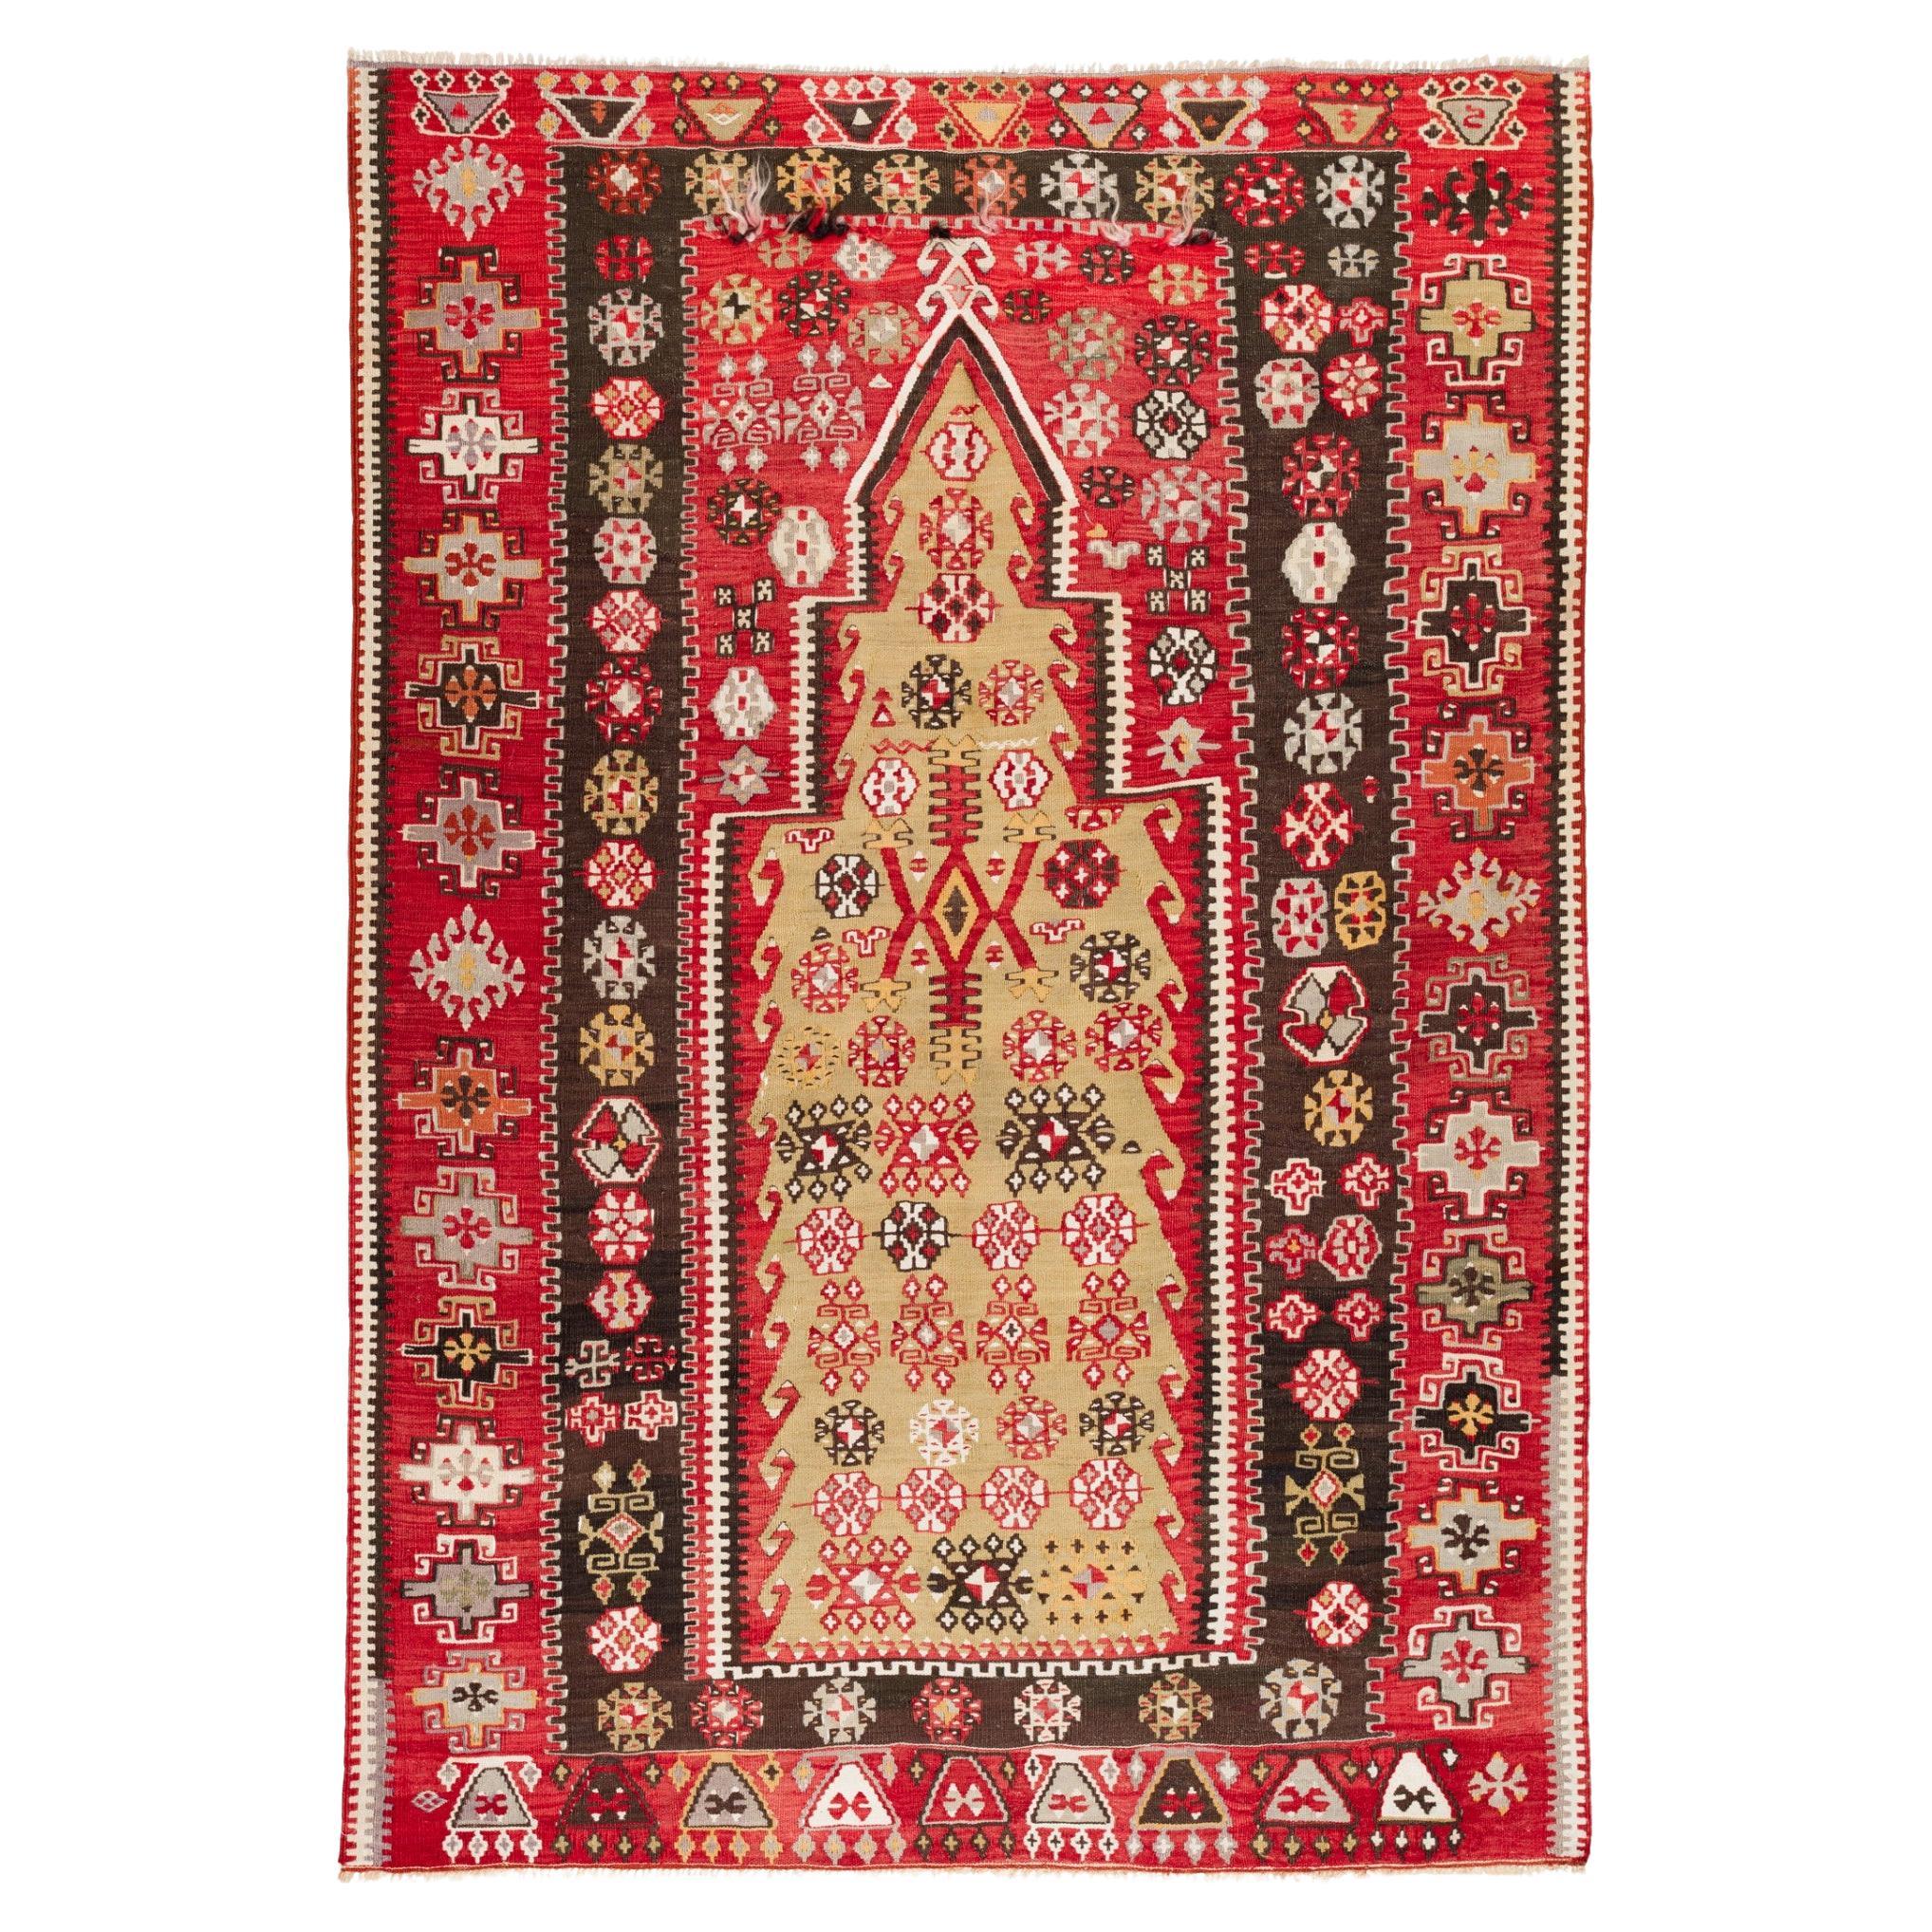 Antique Gomurgen Kayseri Kilim Rug Wool Old Central Anatolian Turkish Carpet For Sale